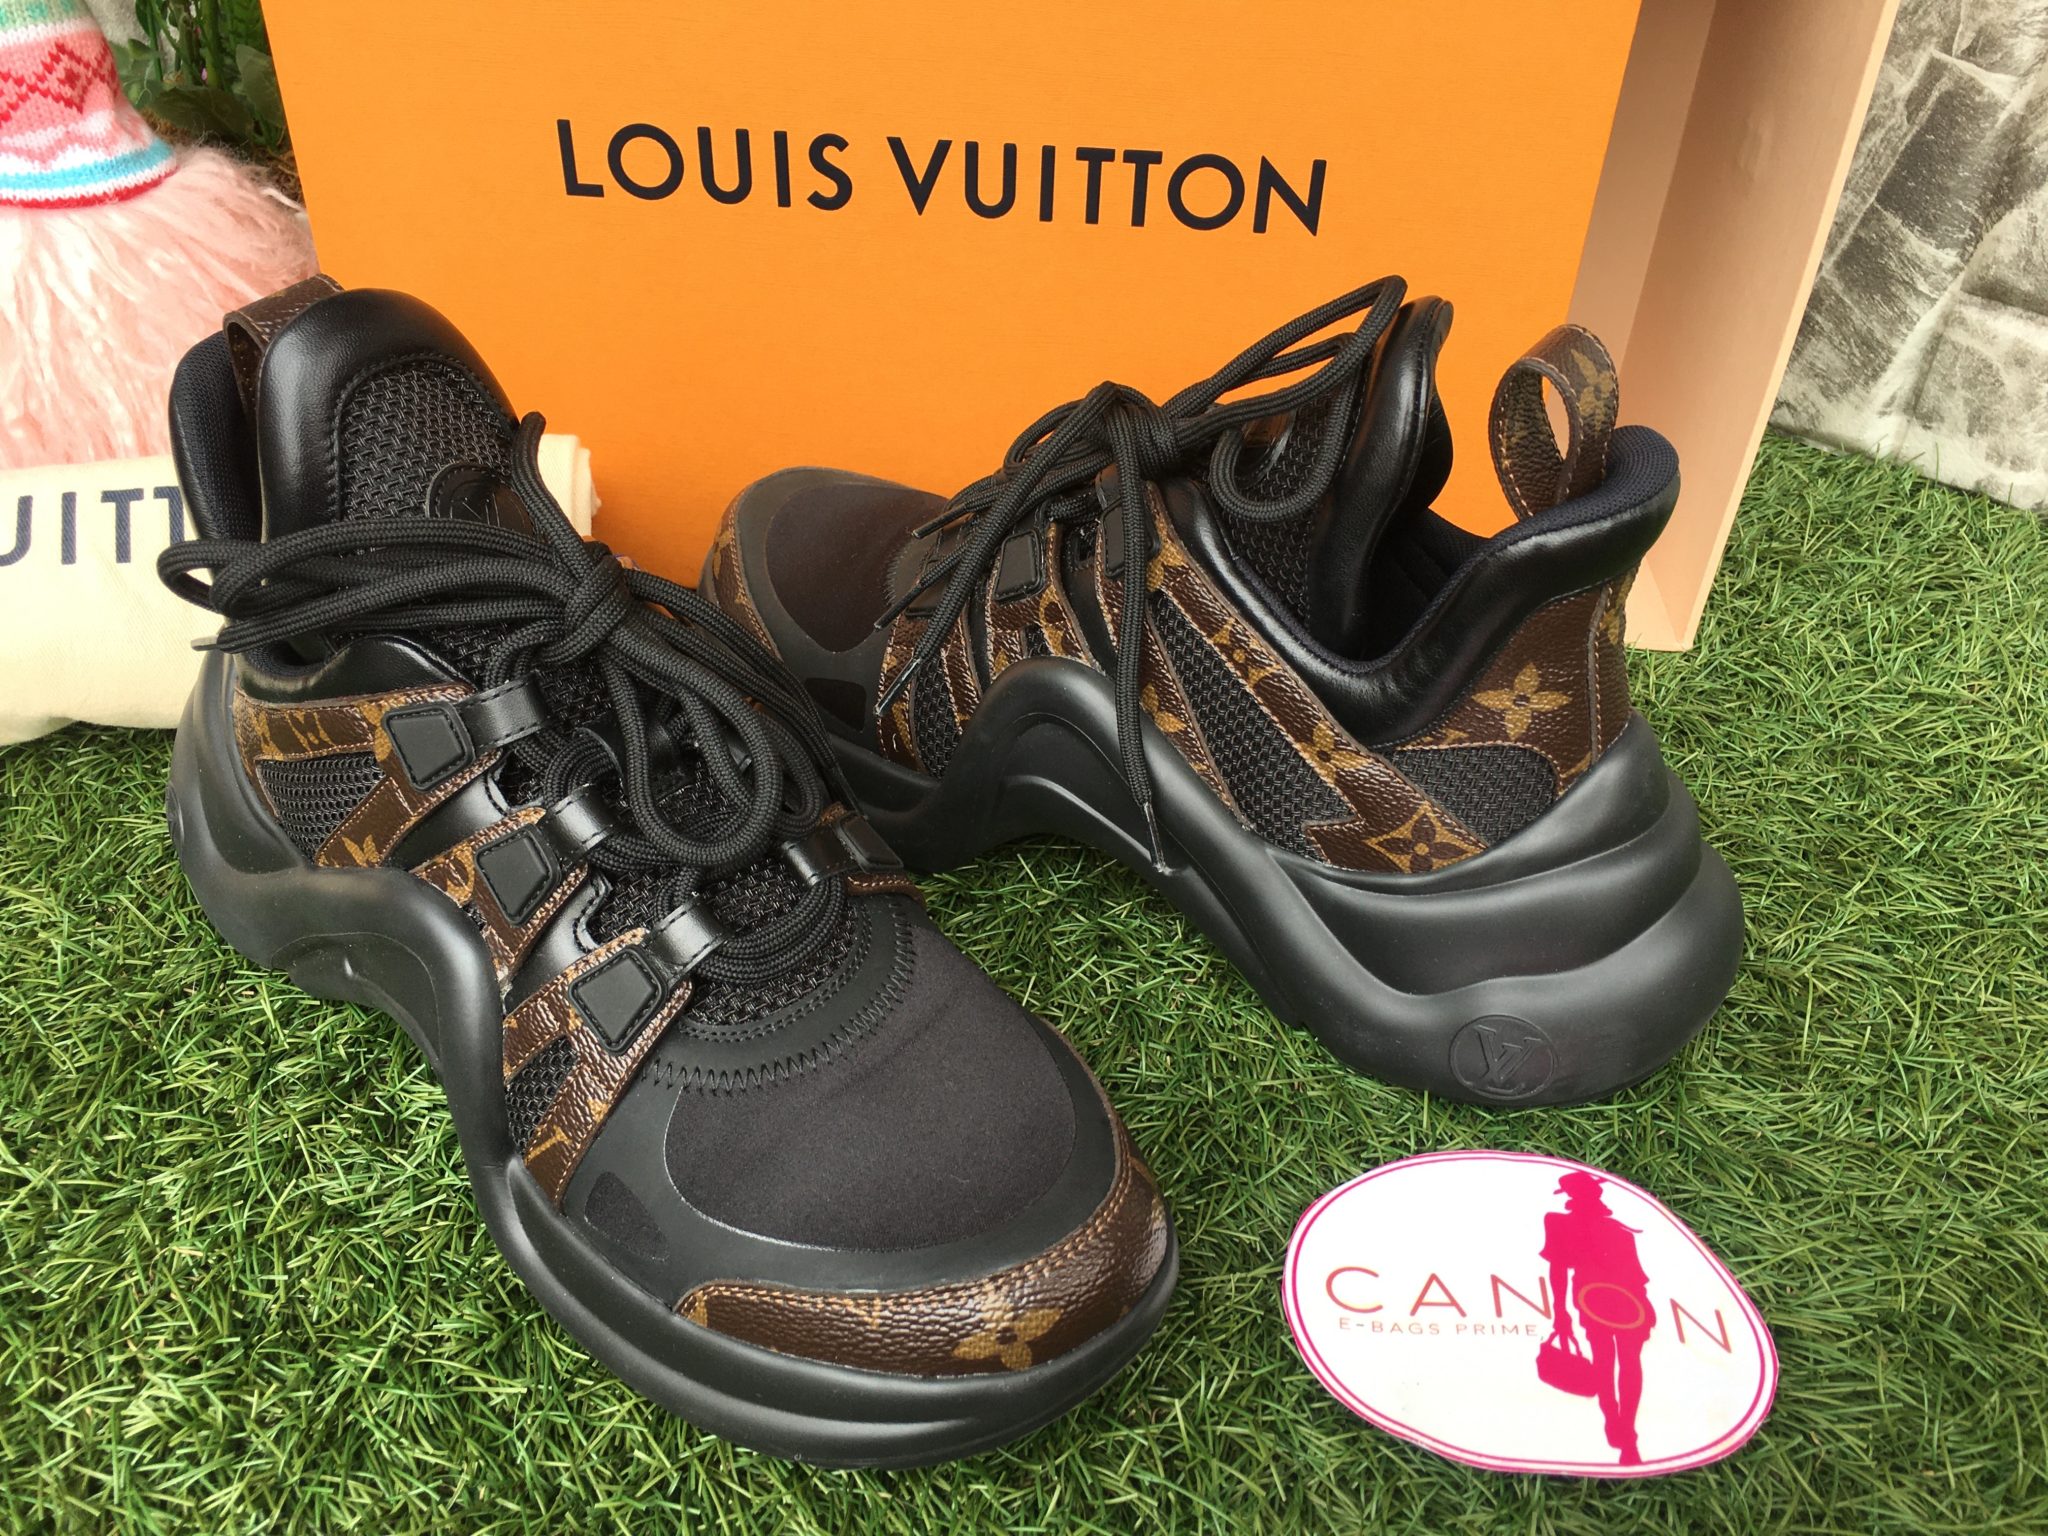 Louis Vuitton LV Archlight Sneakers in Black Monogram Size 38 - Canon E-Bags Prime